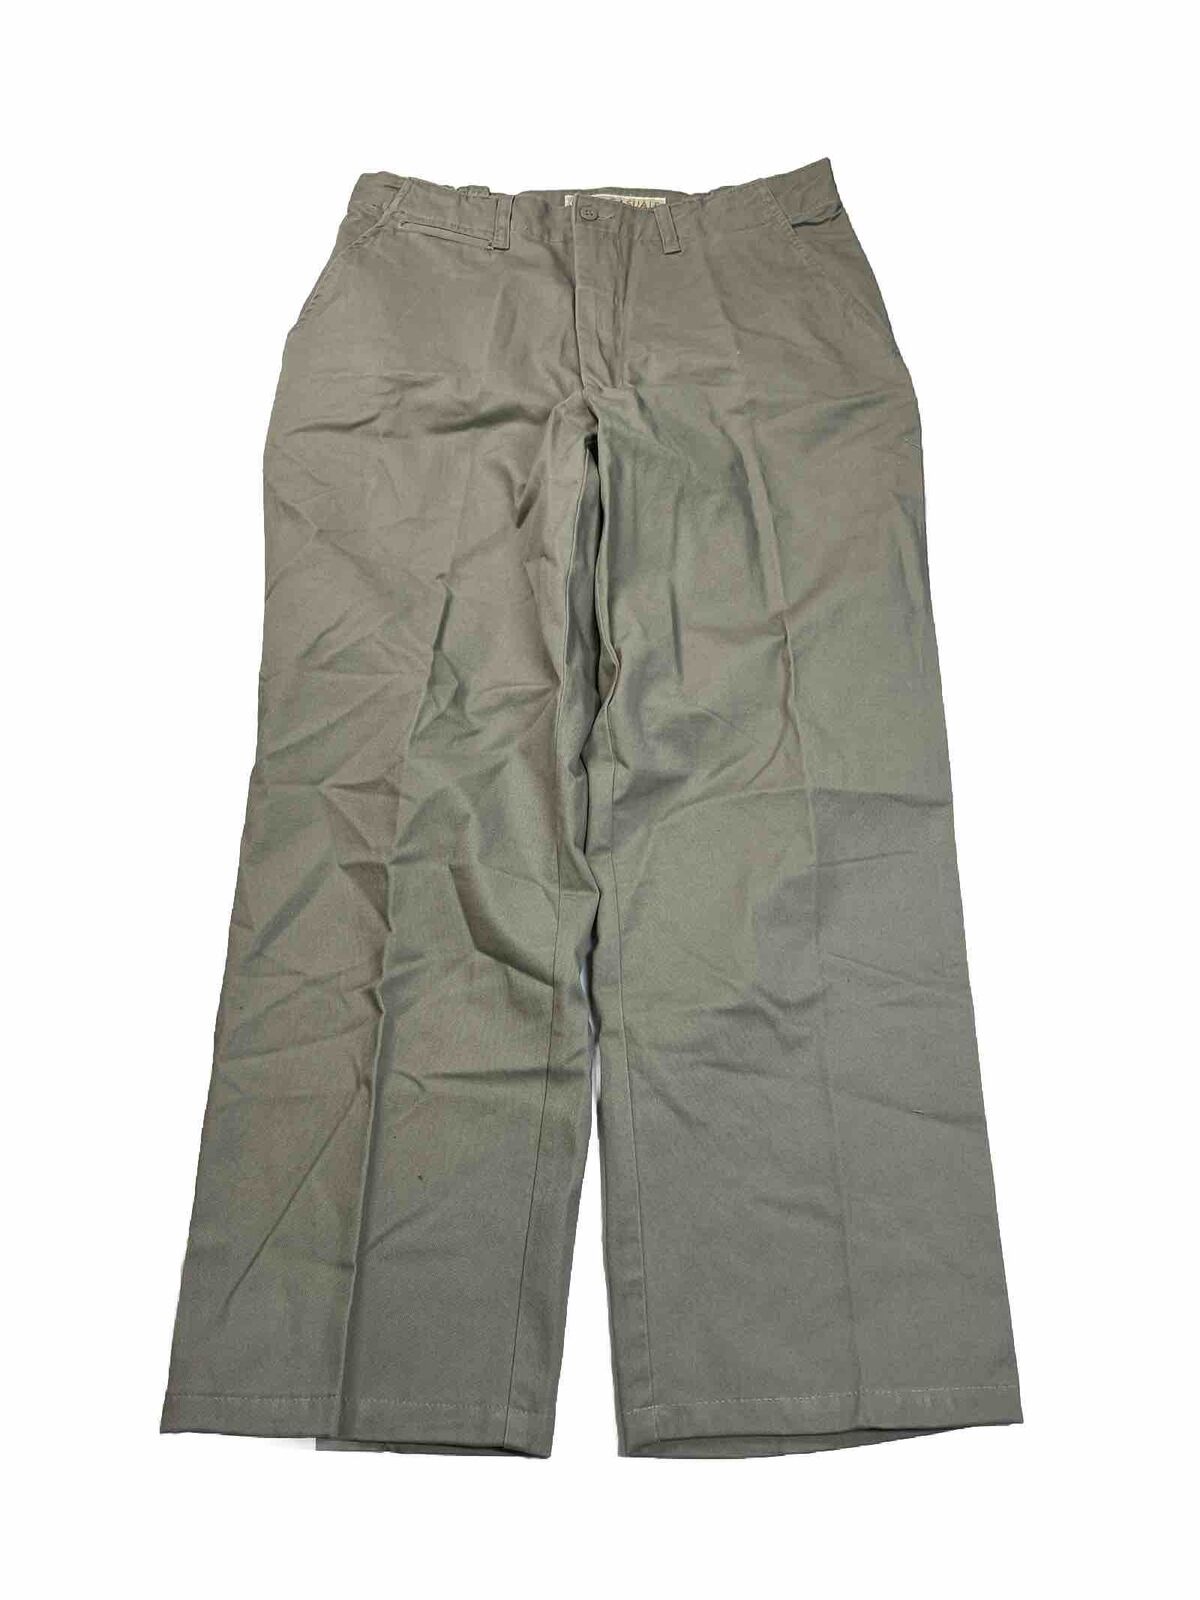 NEW Cabela's Men's Brown Aged Khaki Side Elastic Pants - 34x32